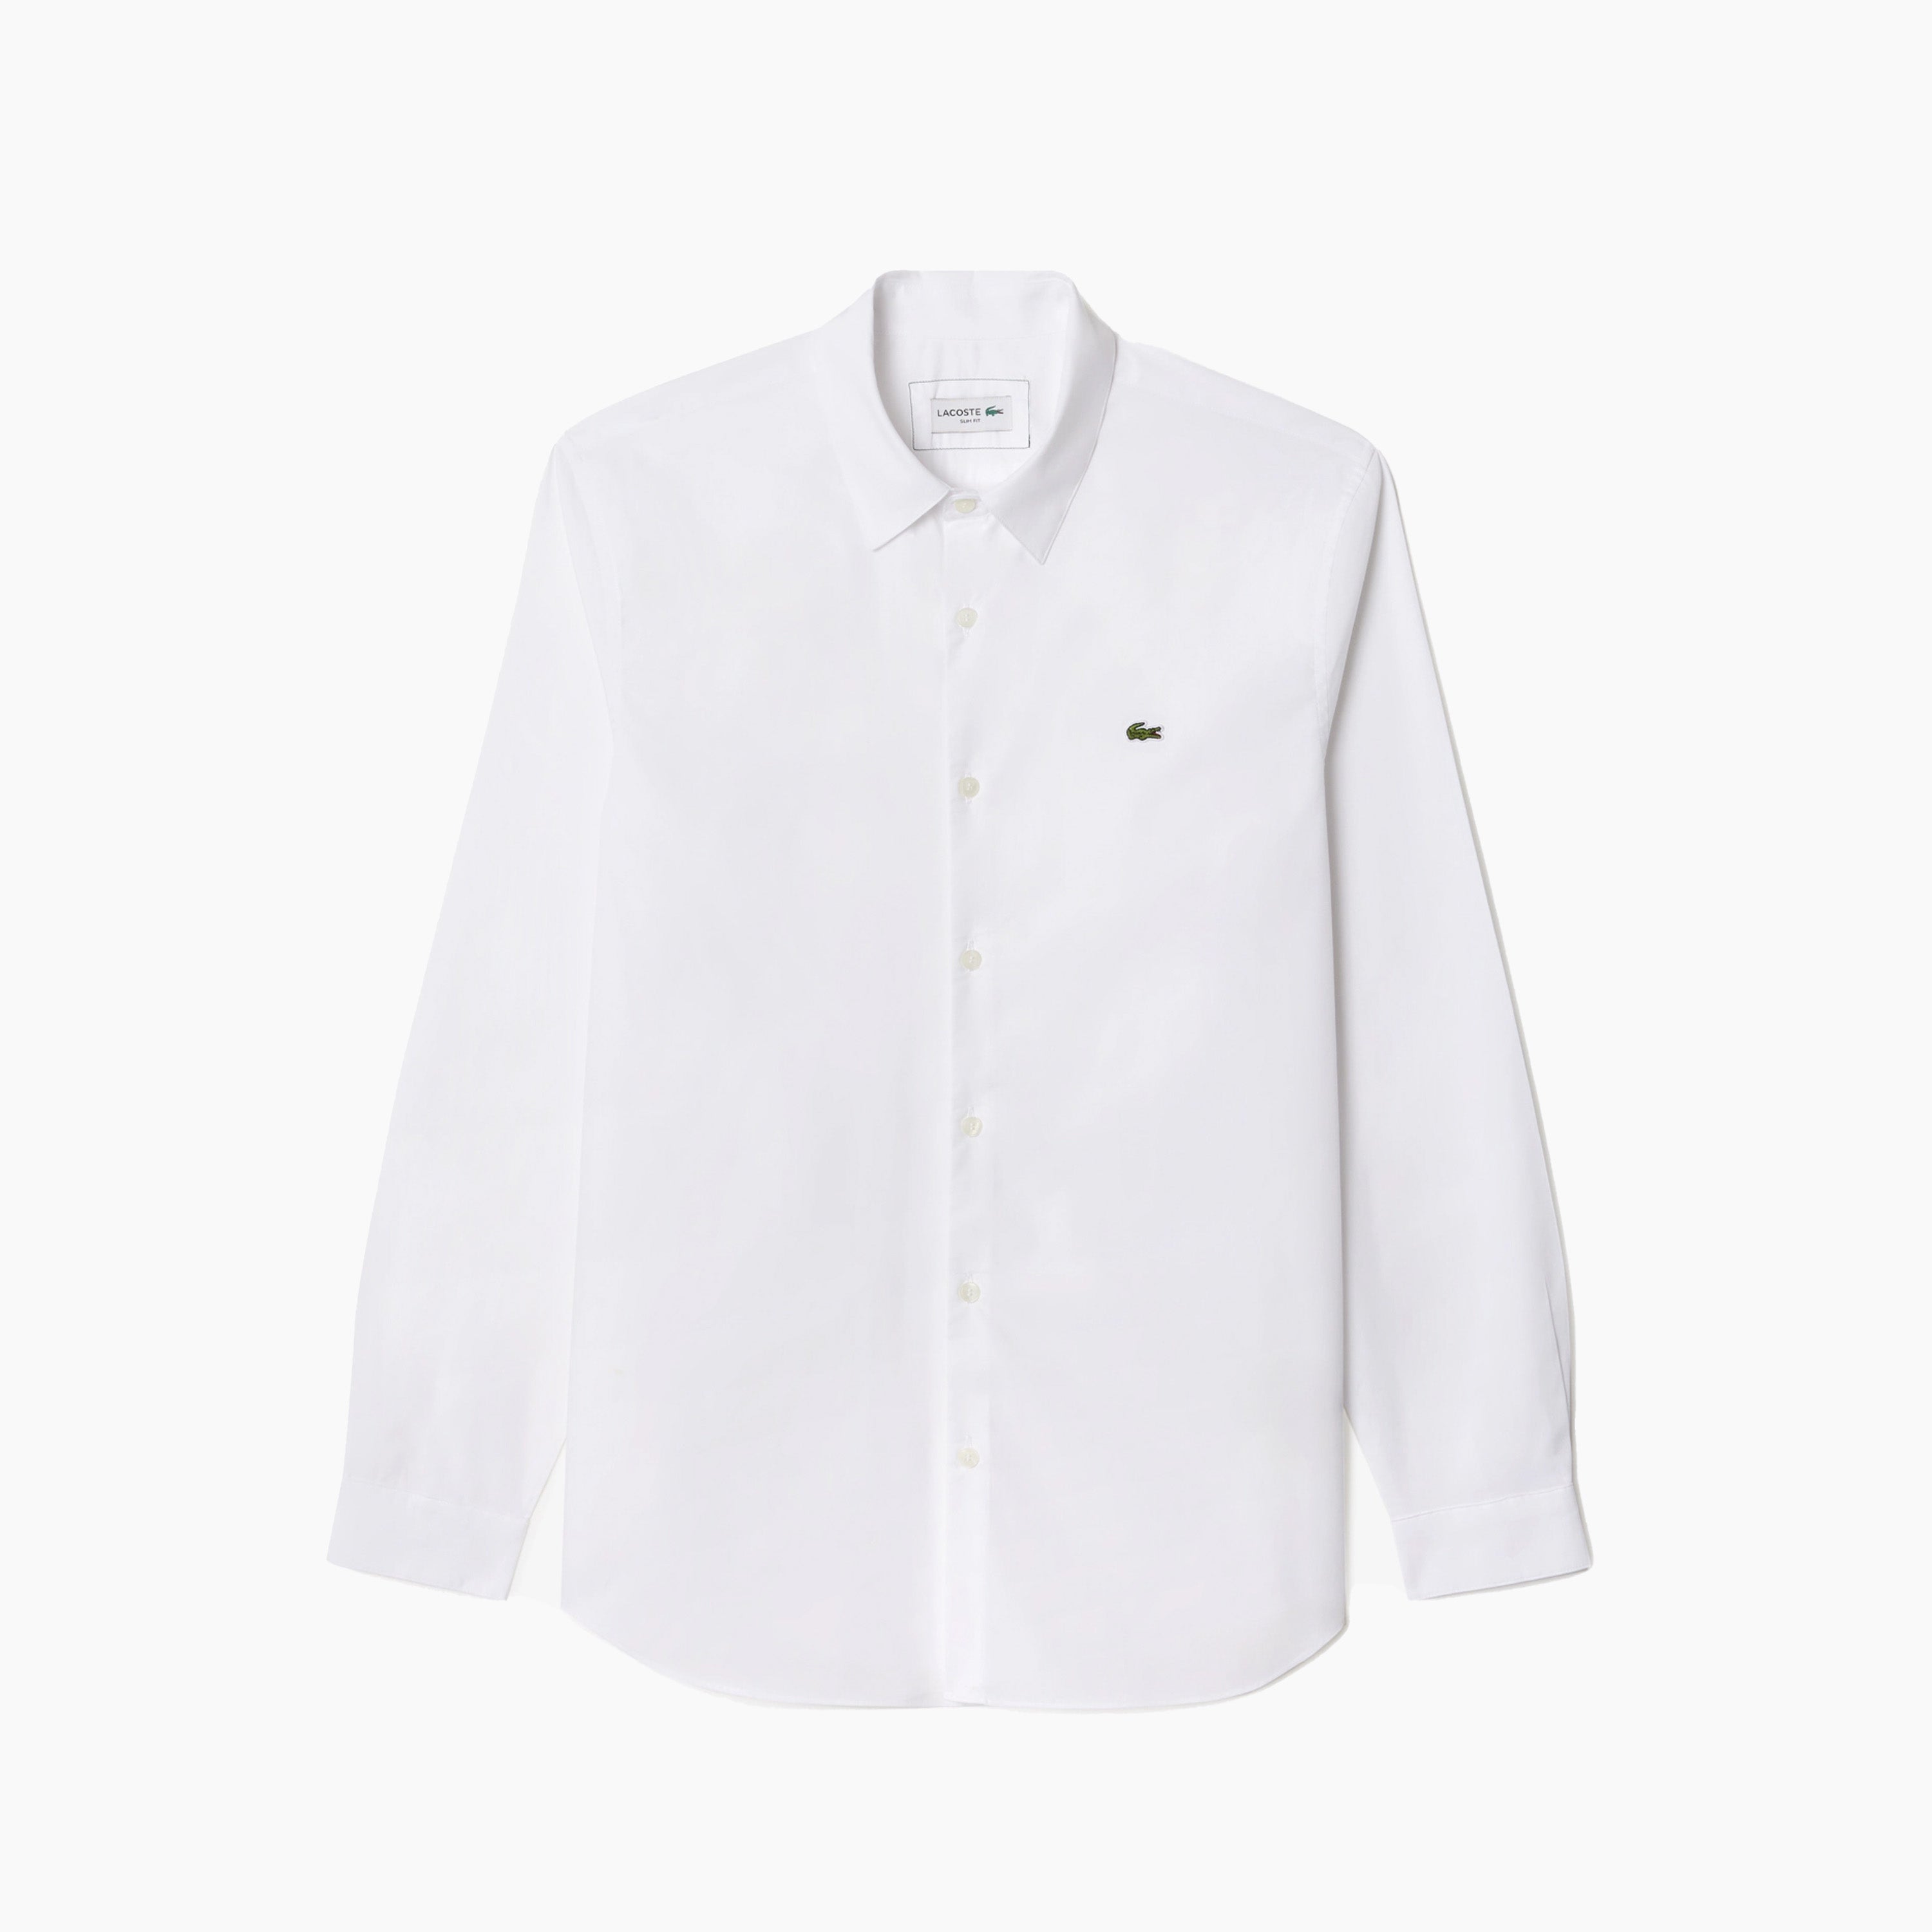 Lacoste White Cotton Stretch Slim Fit Shirt